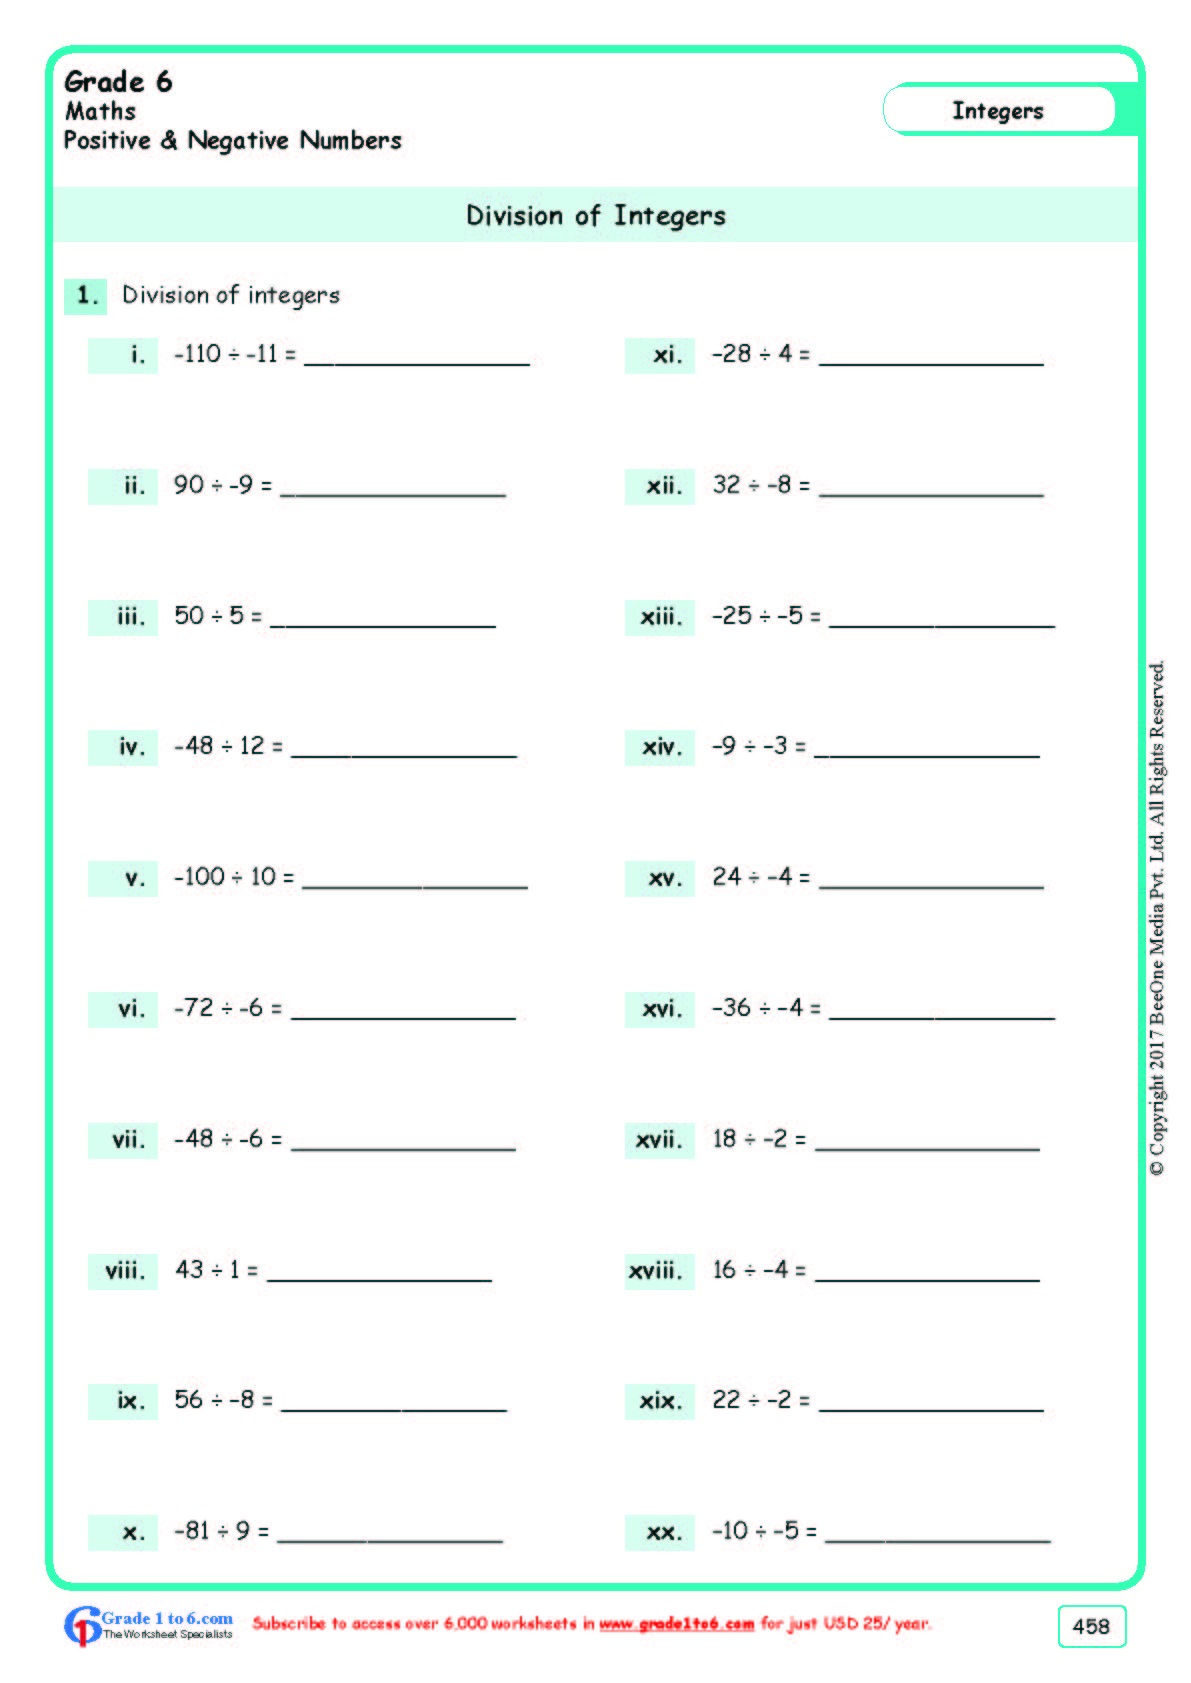 Dividing Integers Worksheets|Grade 6|www.grade1to6.com